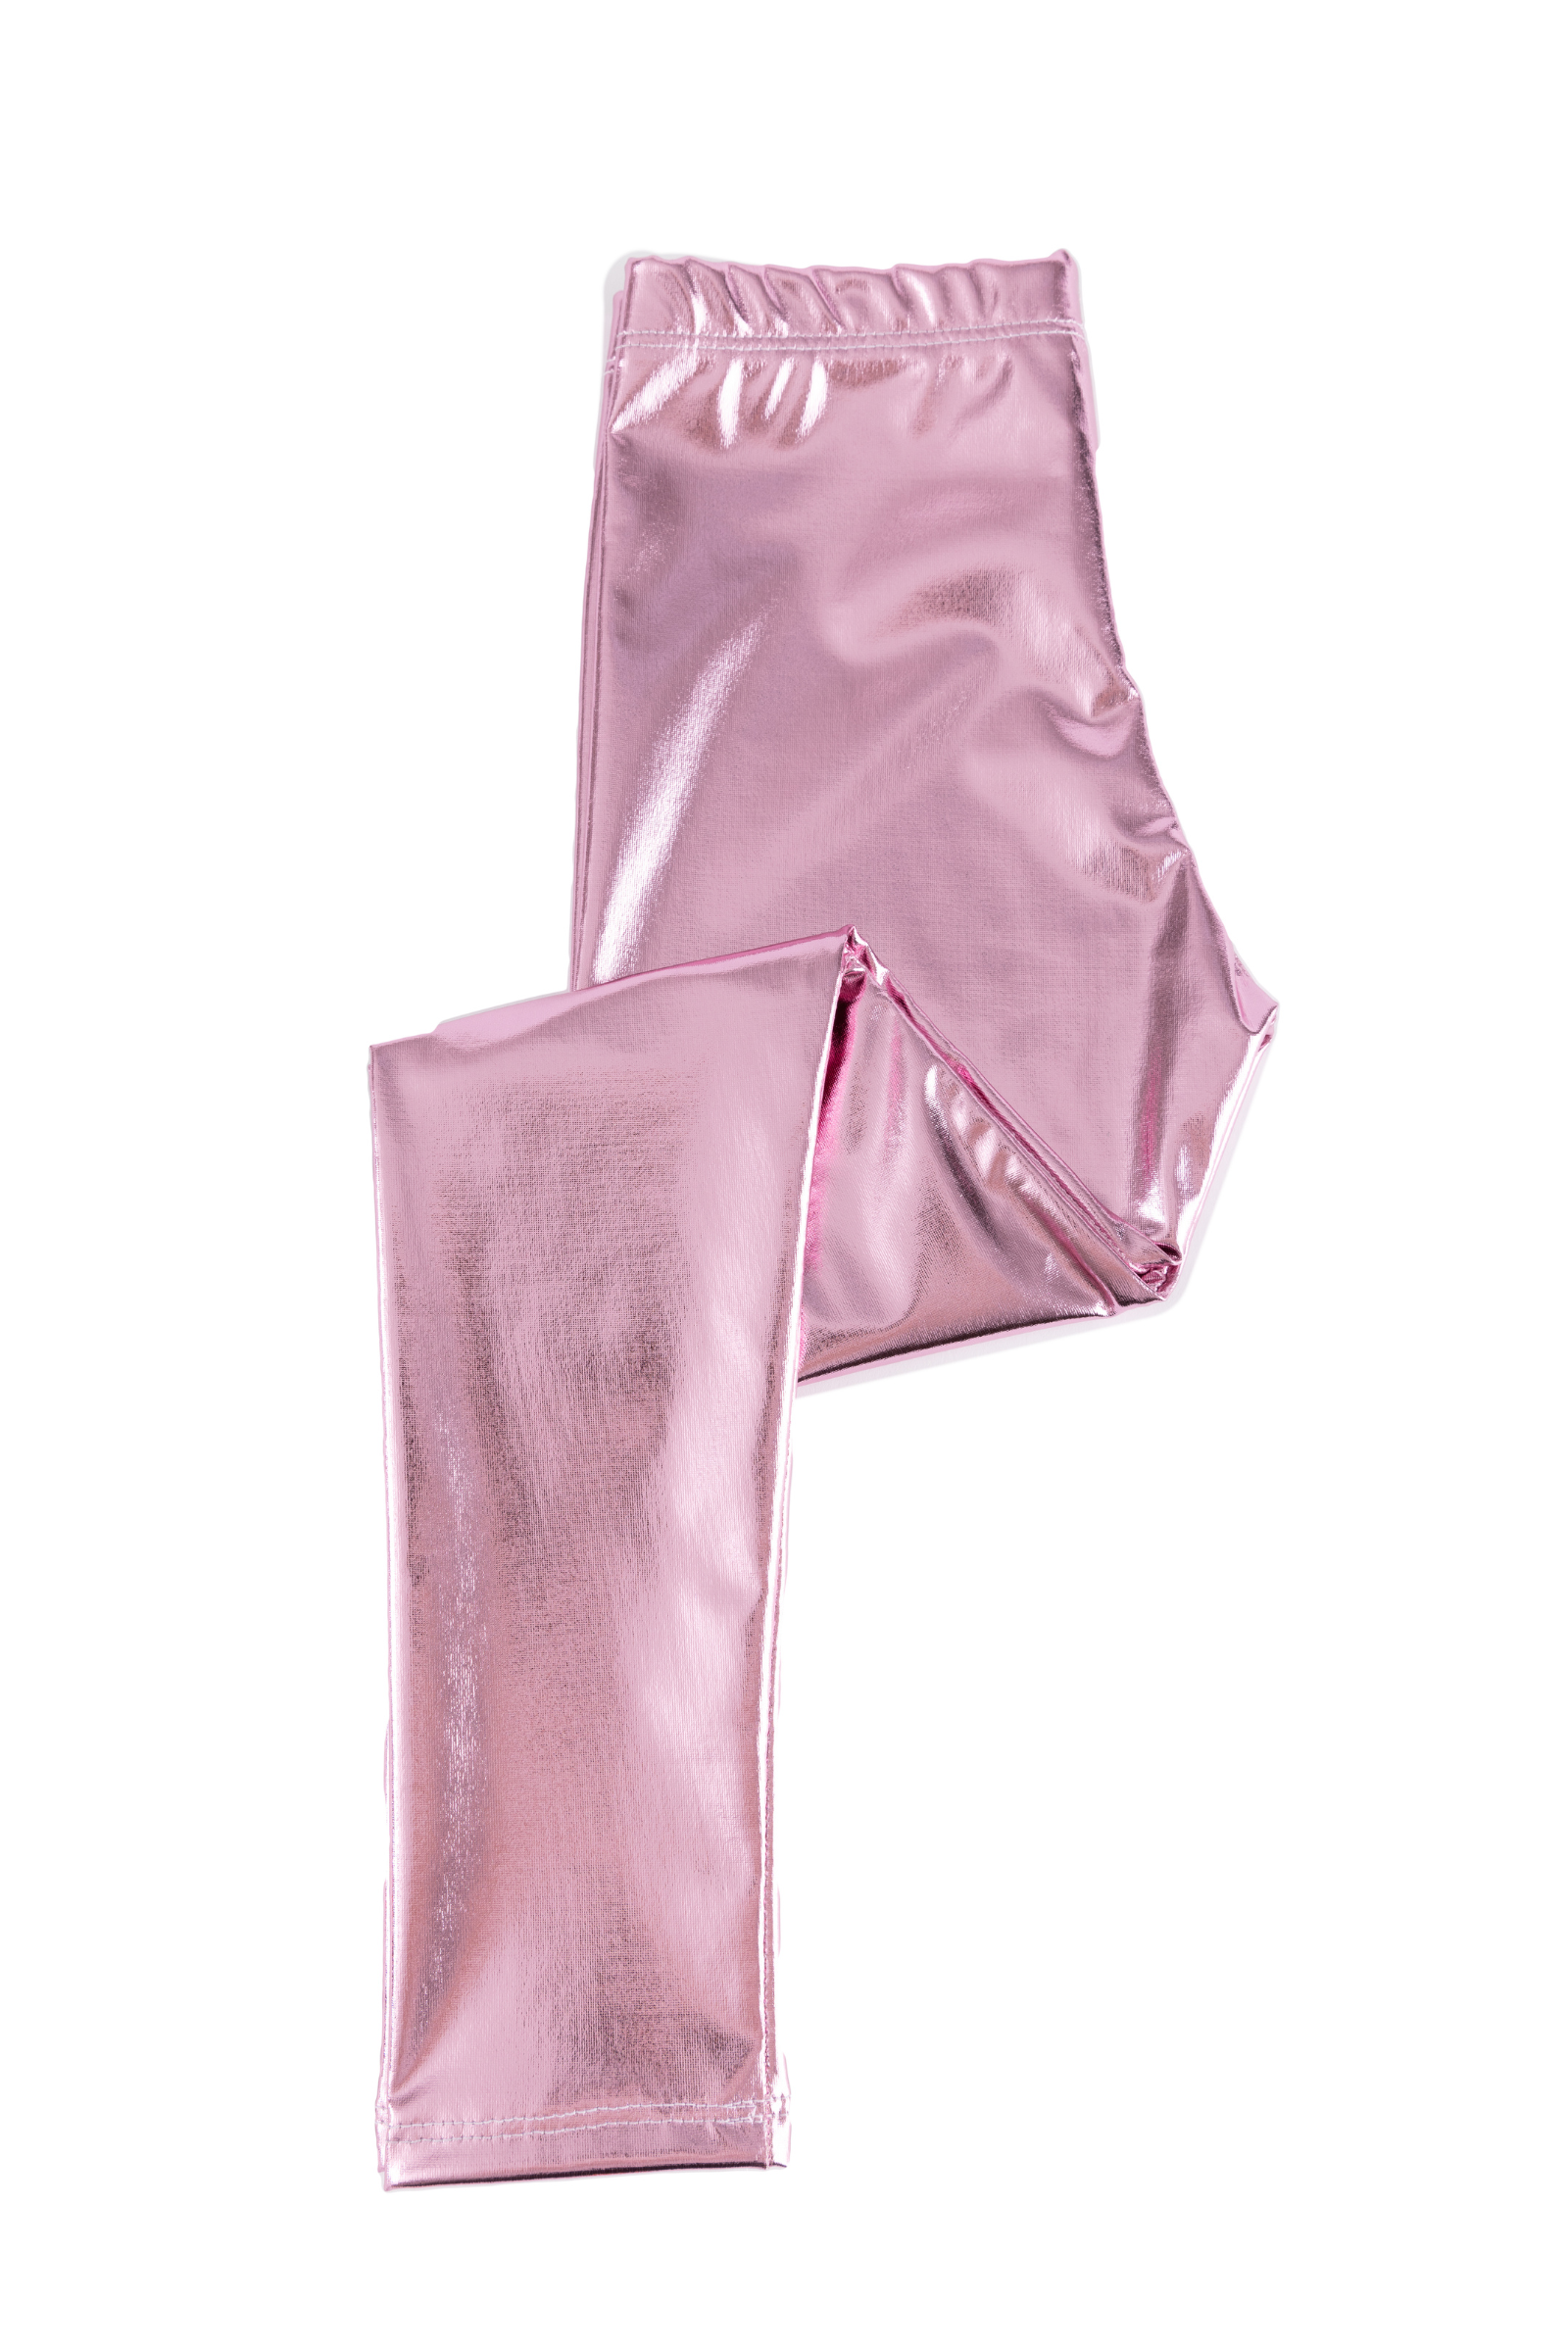 Rose Nude Metallic Shimmer Pants (Leggings) - Bestyfit Canada